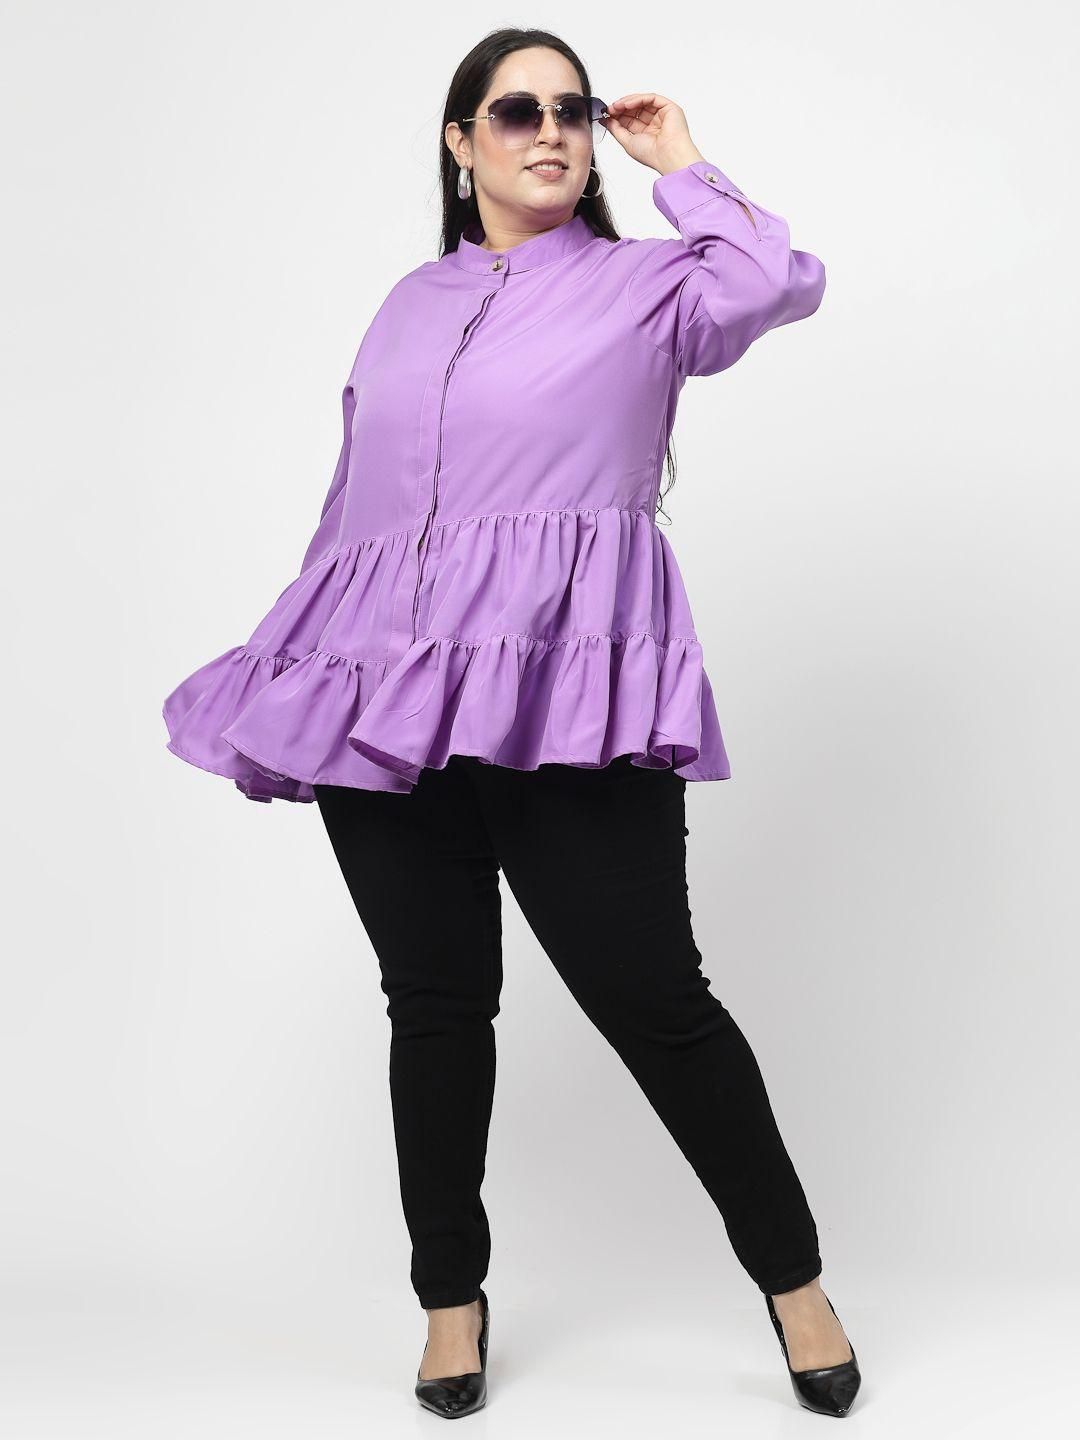 Flambeur Women's Plus Size Solid Purple Full Sleeve Top